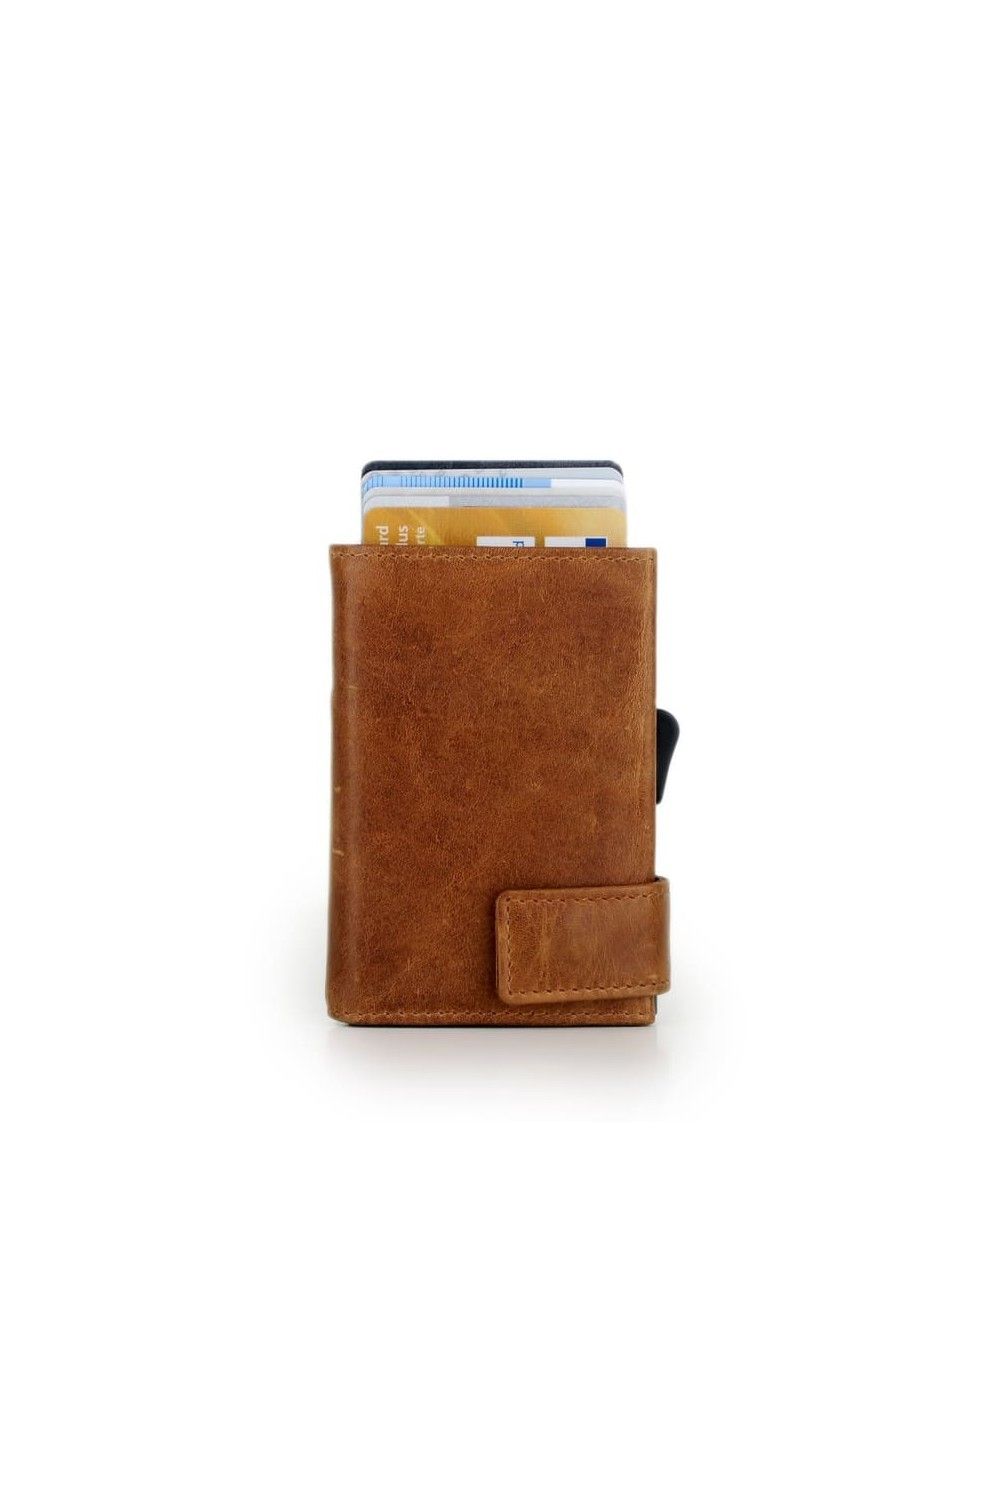 SecWal Card Case XL DK Leather Cognac